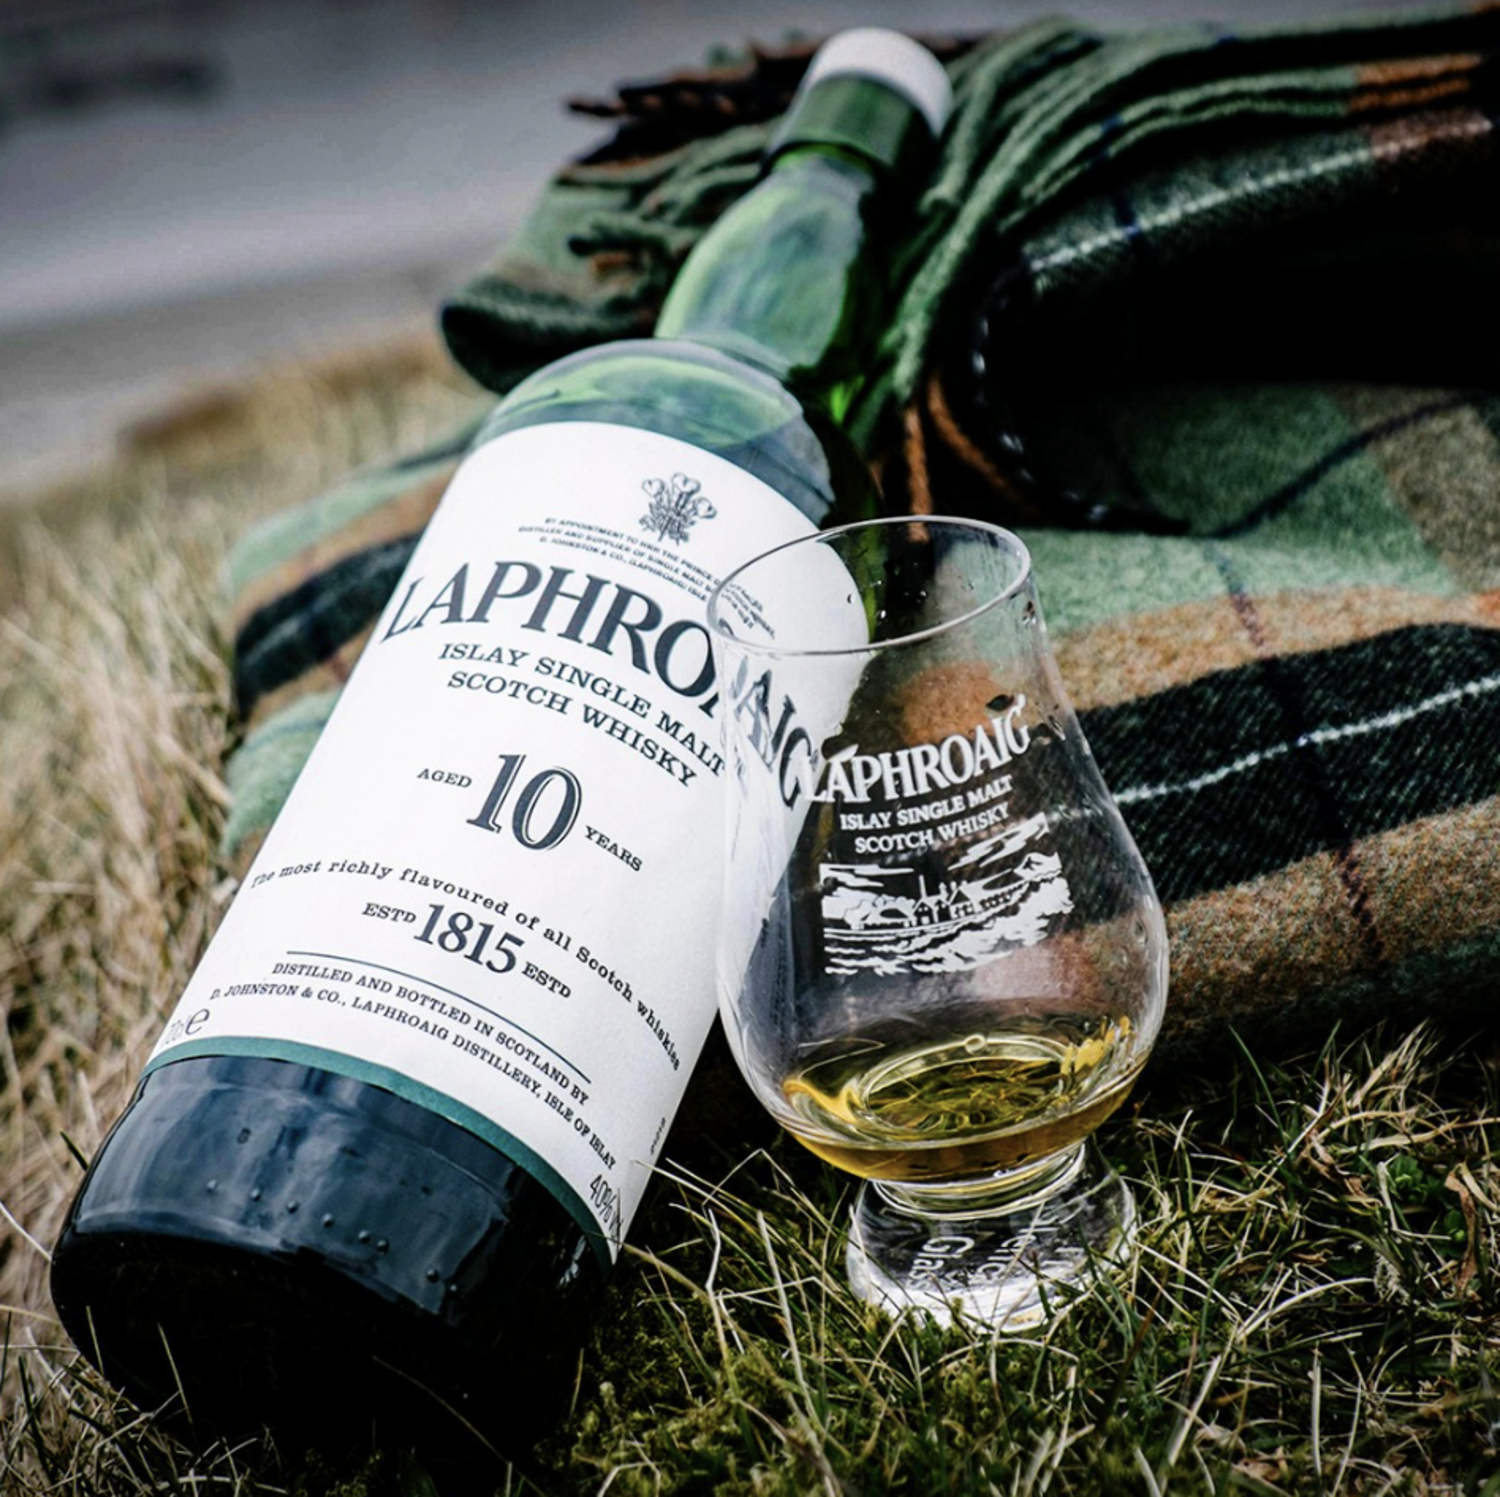 Laphroaig 10 Years Islay Single Malt Scotch Whisky – Grain & Vine